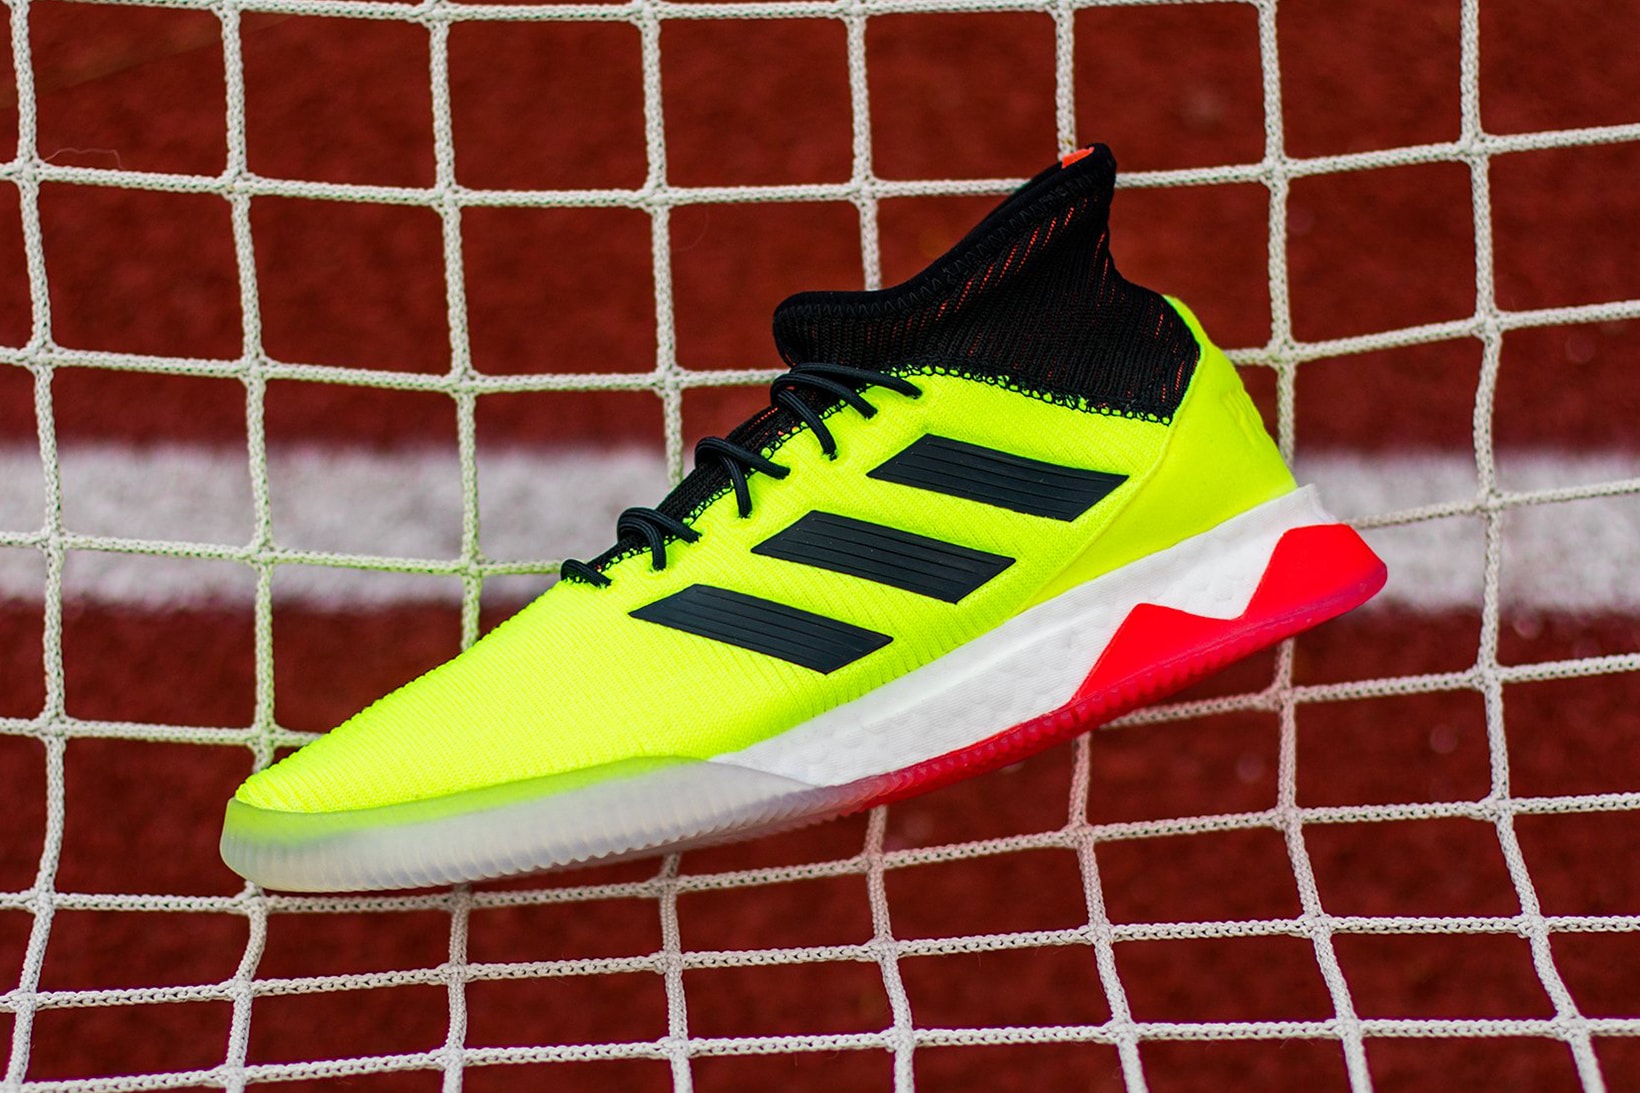 adidas Predator Tango 18 1 Solar Yellow black solar red may 2018 release date info drop sneakers shoes footwear politics soccer football